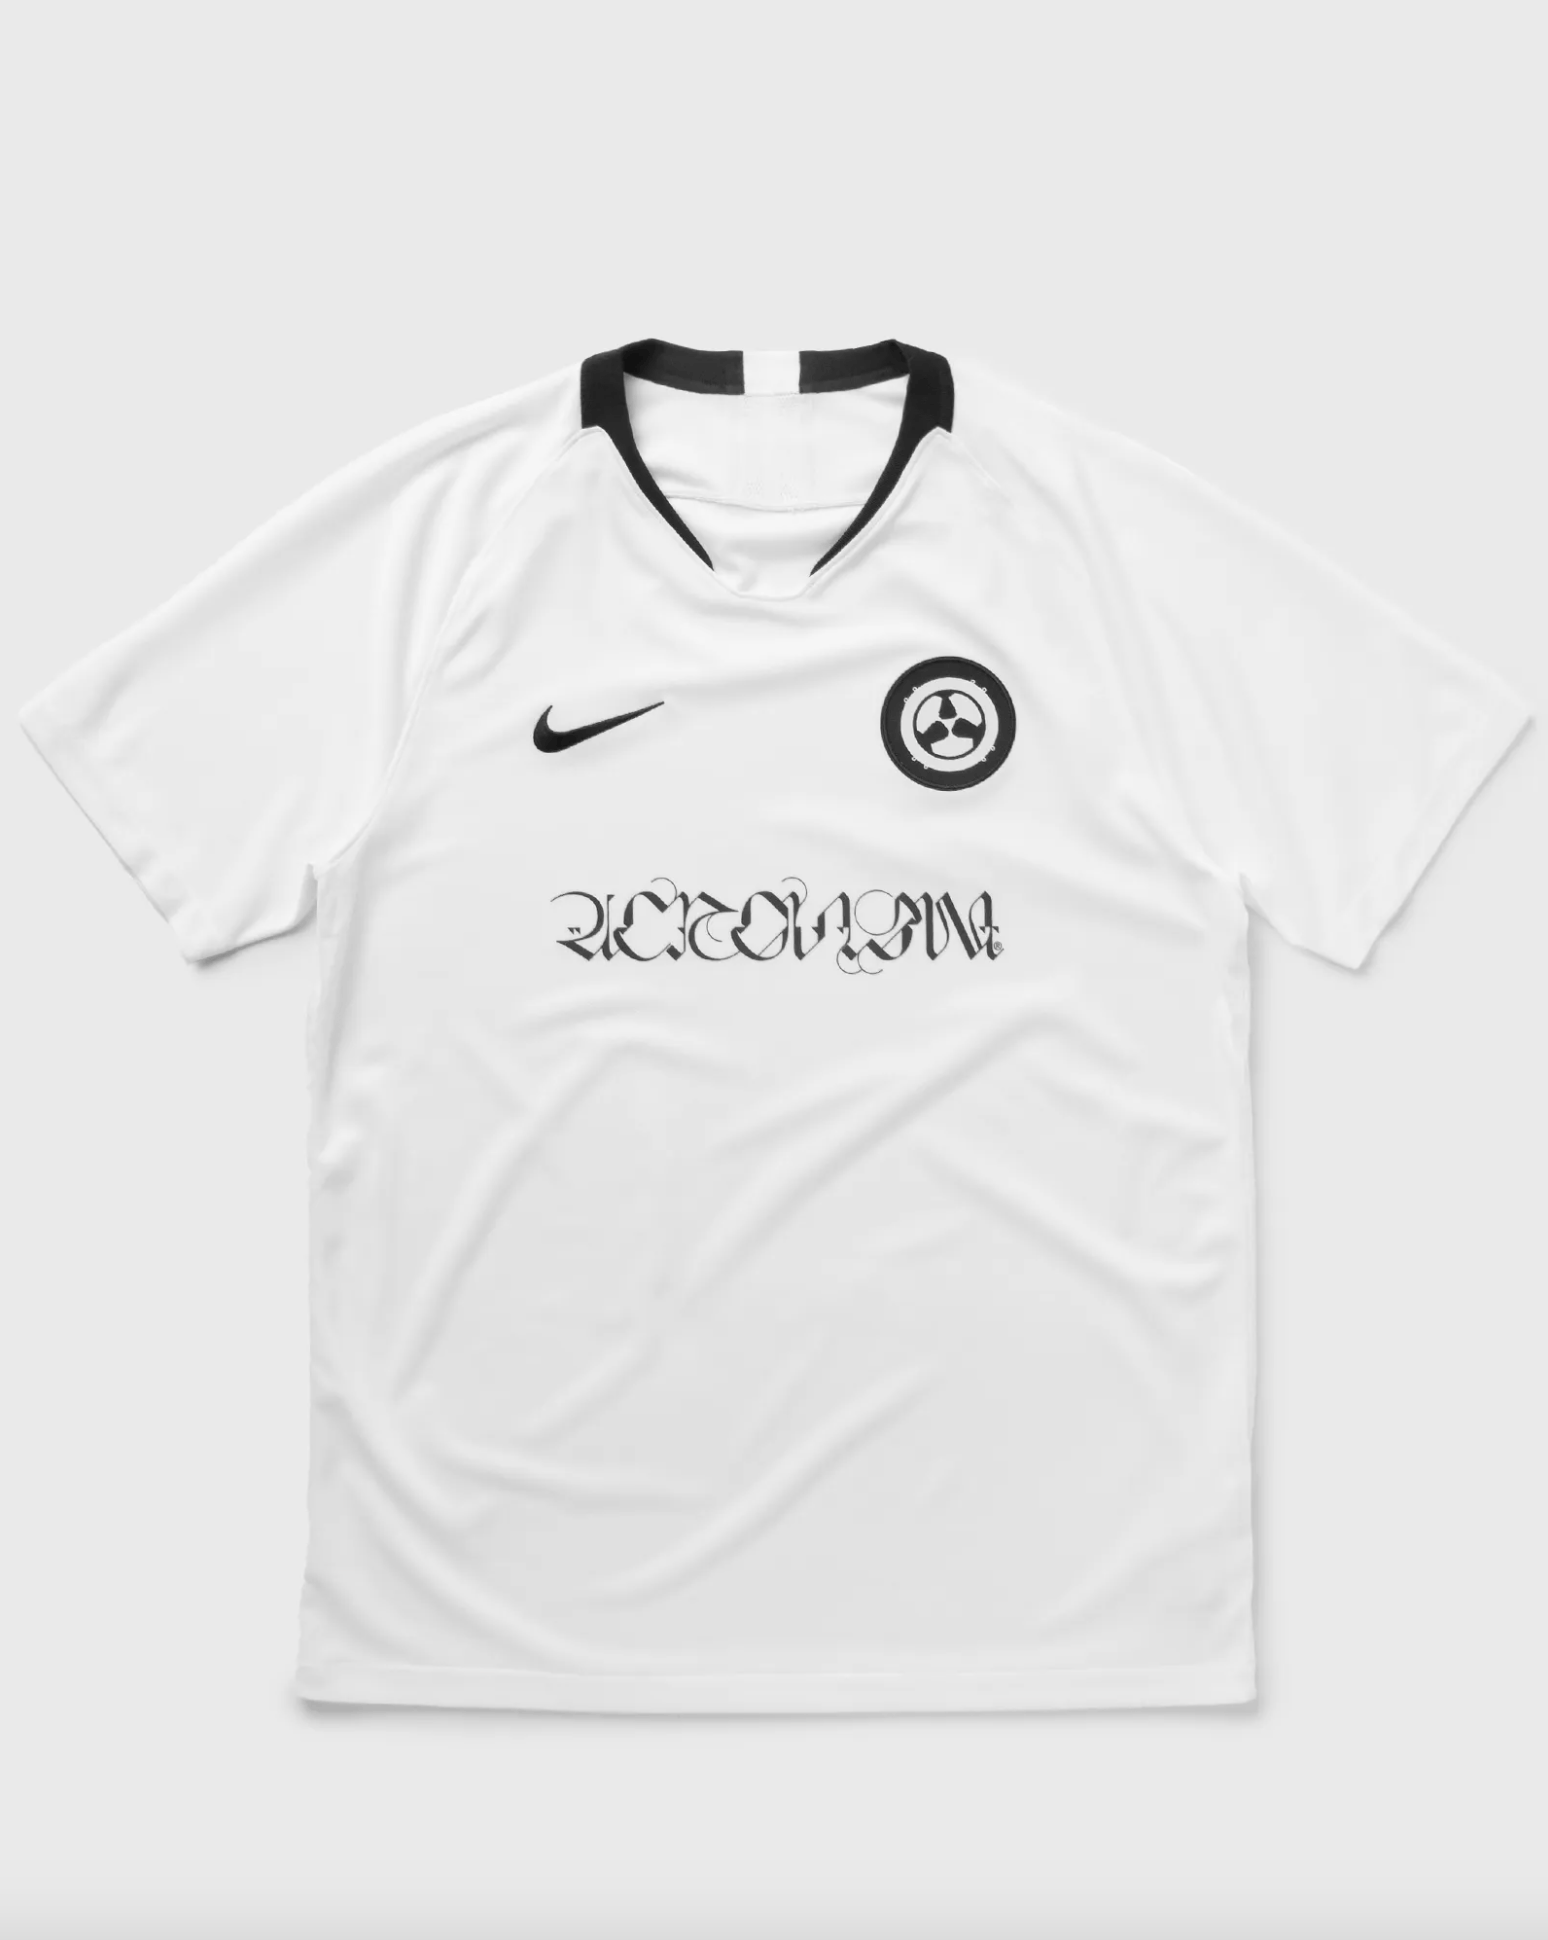 Pre-owned Acronym X Nike New/unworn Nwt Nike X Acronym Stadium Jersey Arge In White/black